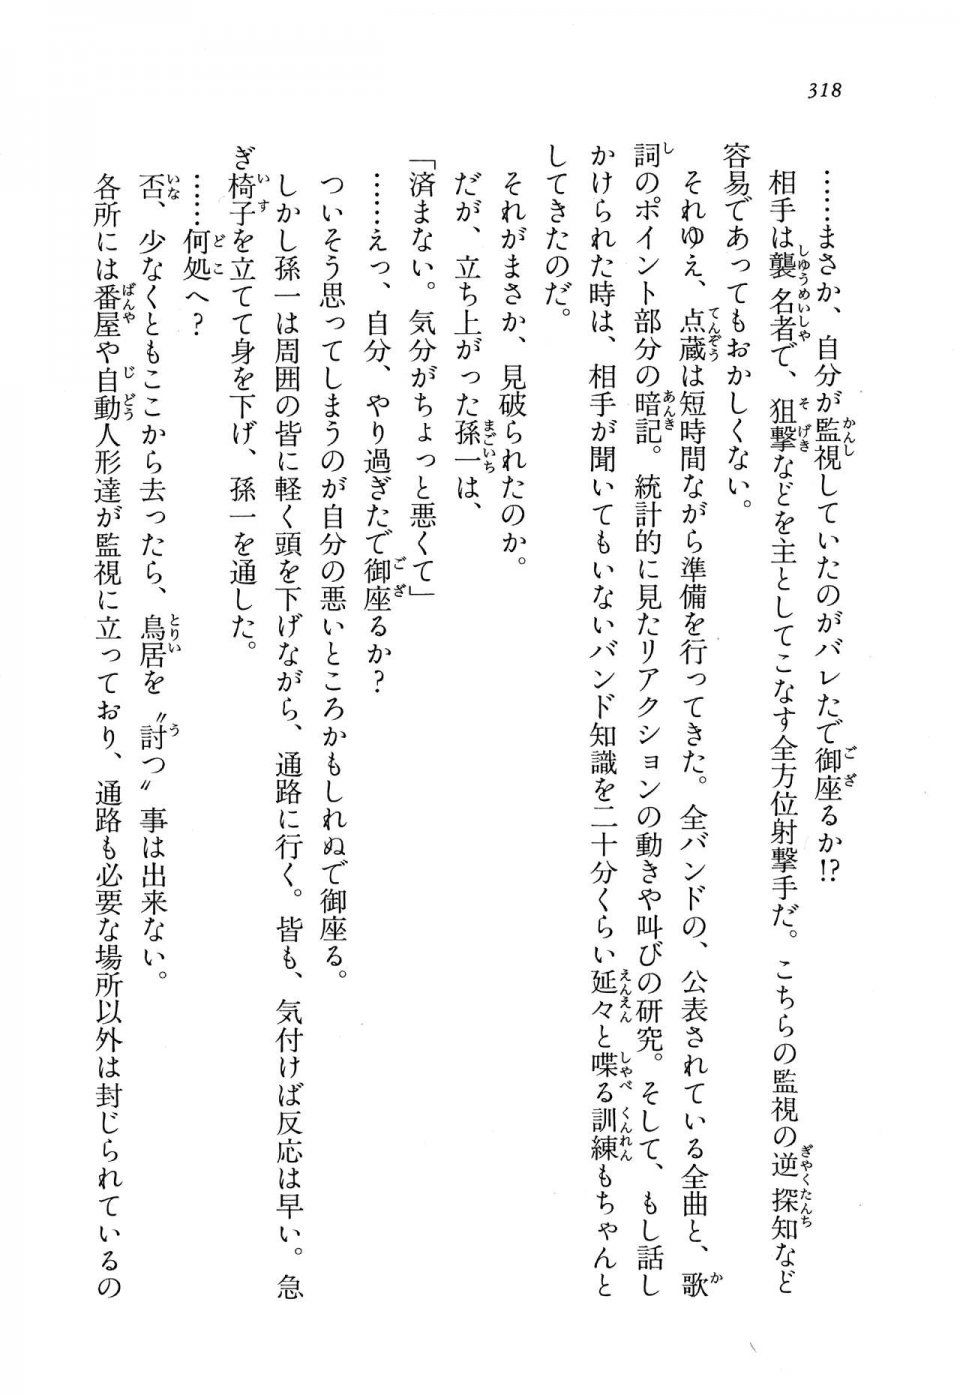 Kyoukai Senjou no Horizon BD Special Mininovel Vol 8(4B) - Photo #322